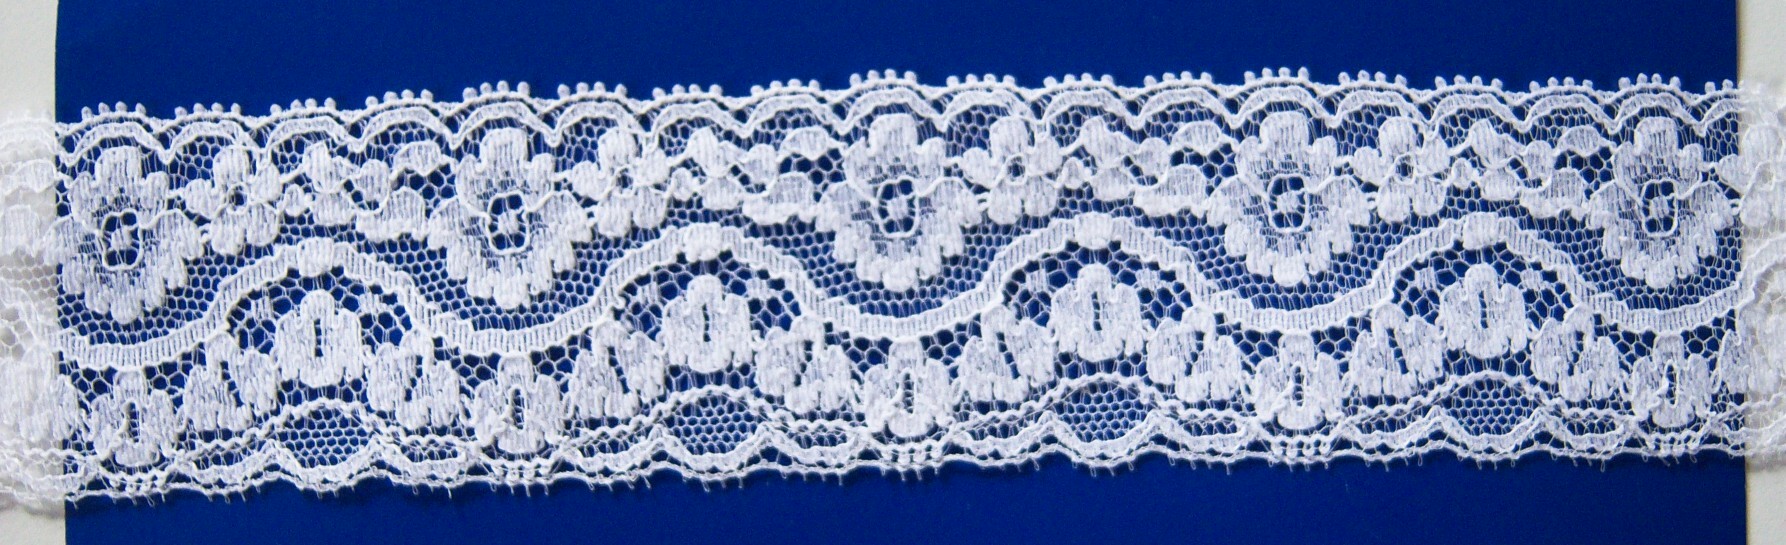 White Nylon Lace